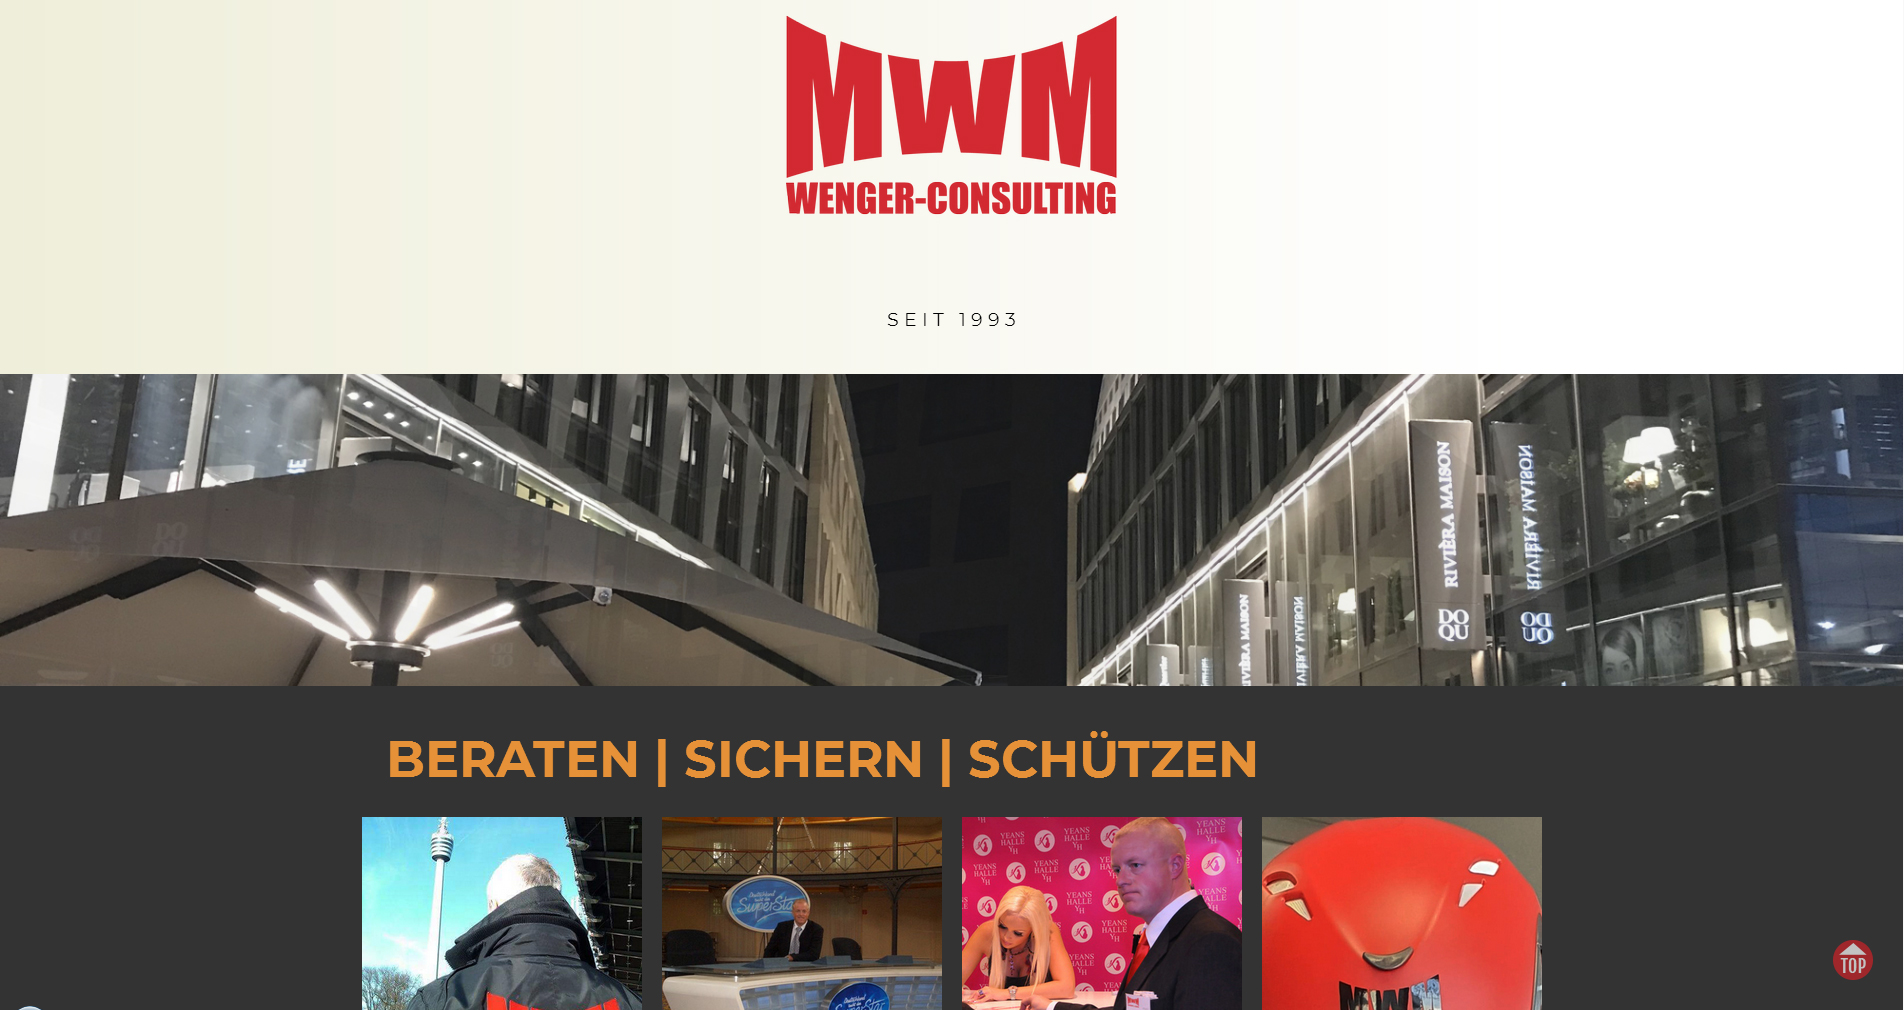 (c) Mwm-sicherheit.de